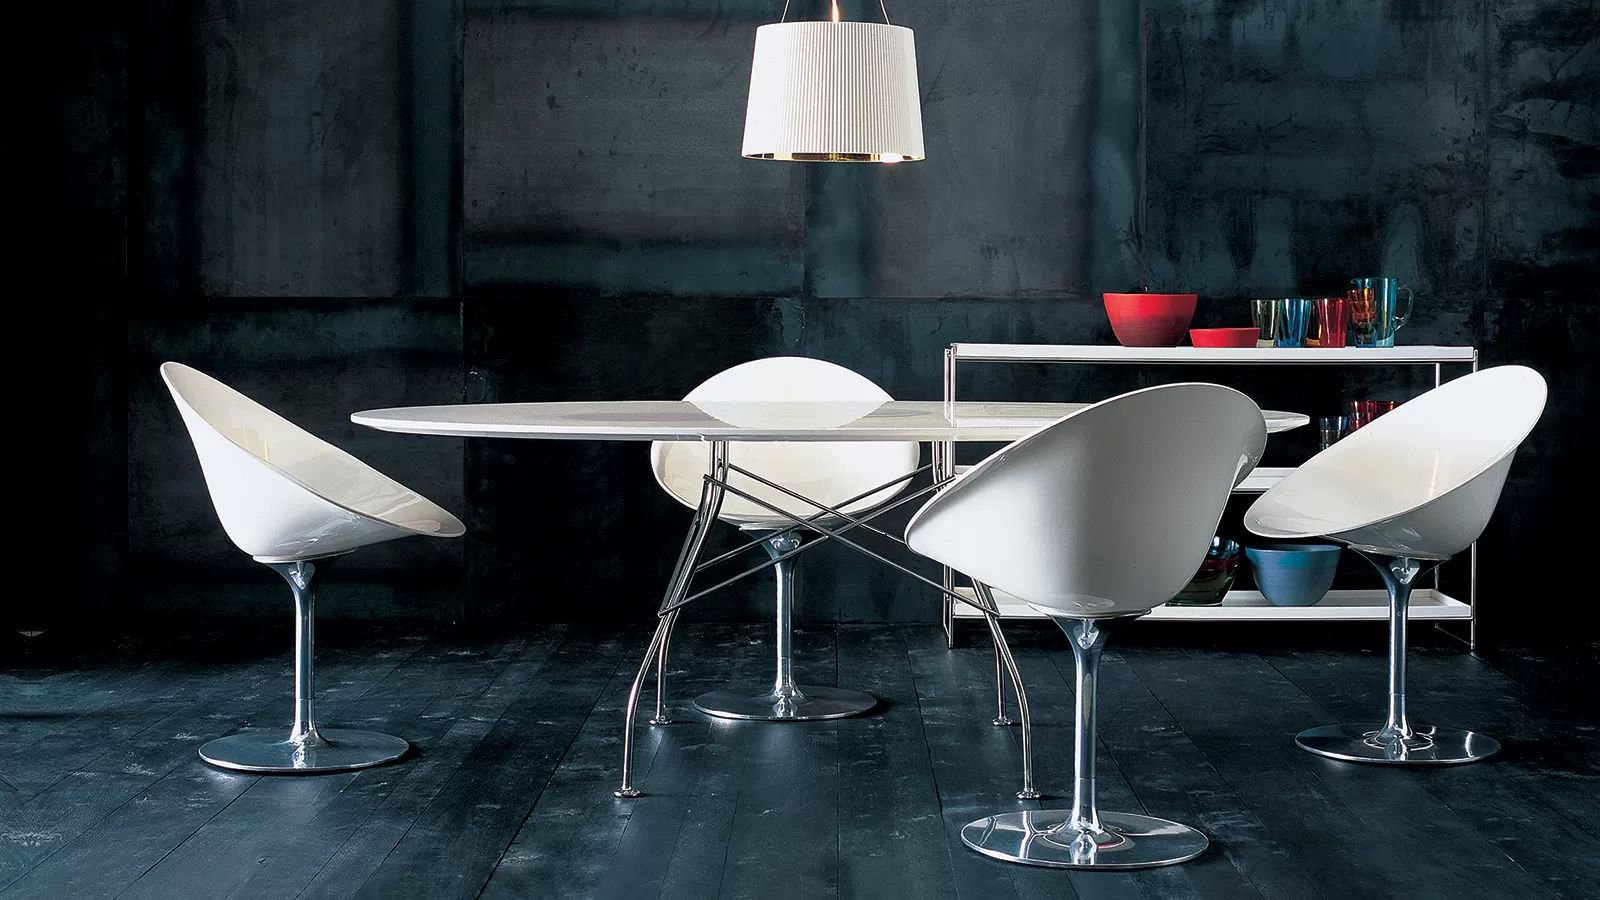 Ero |S| Swivel chair from Kartell, designed by Philippe Starck